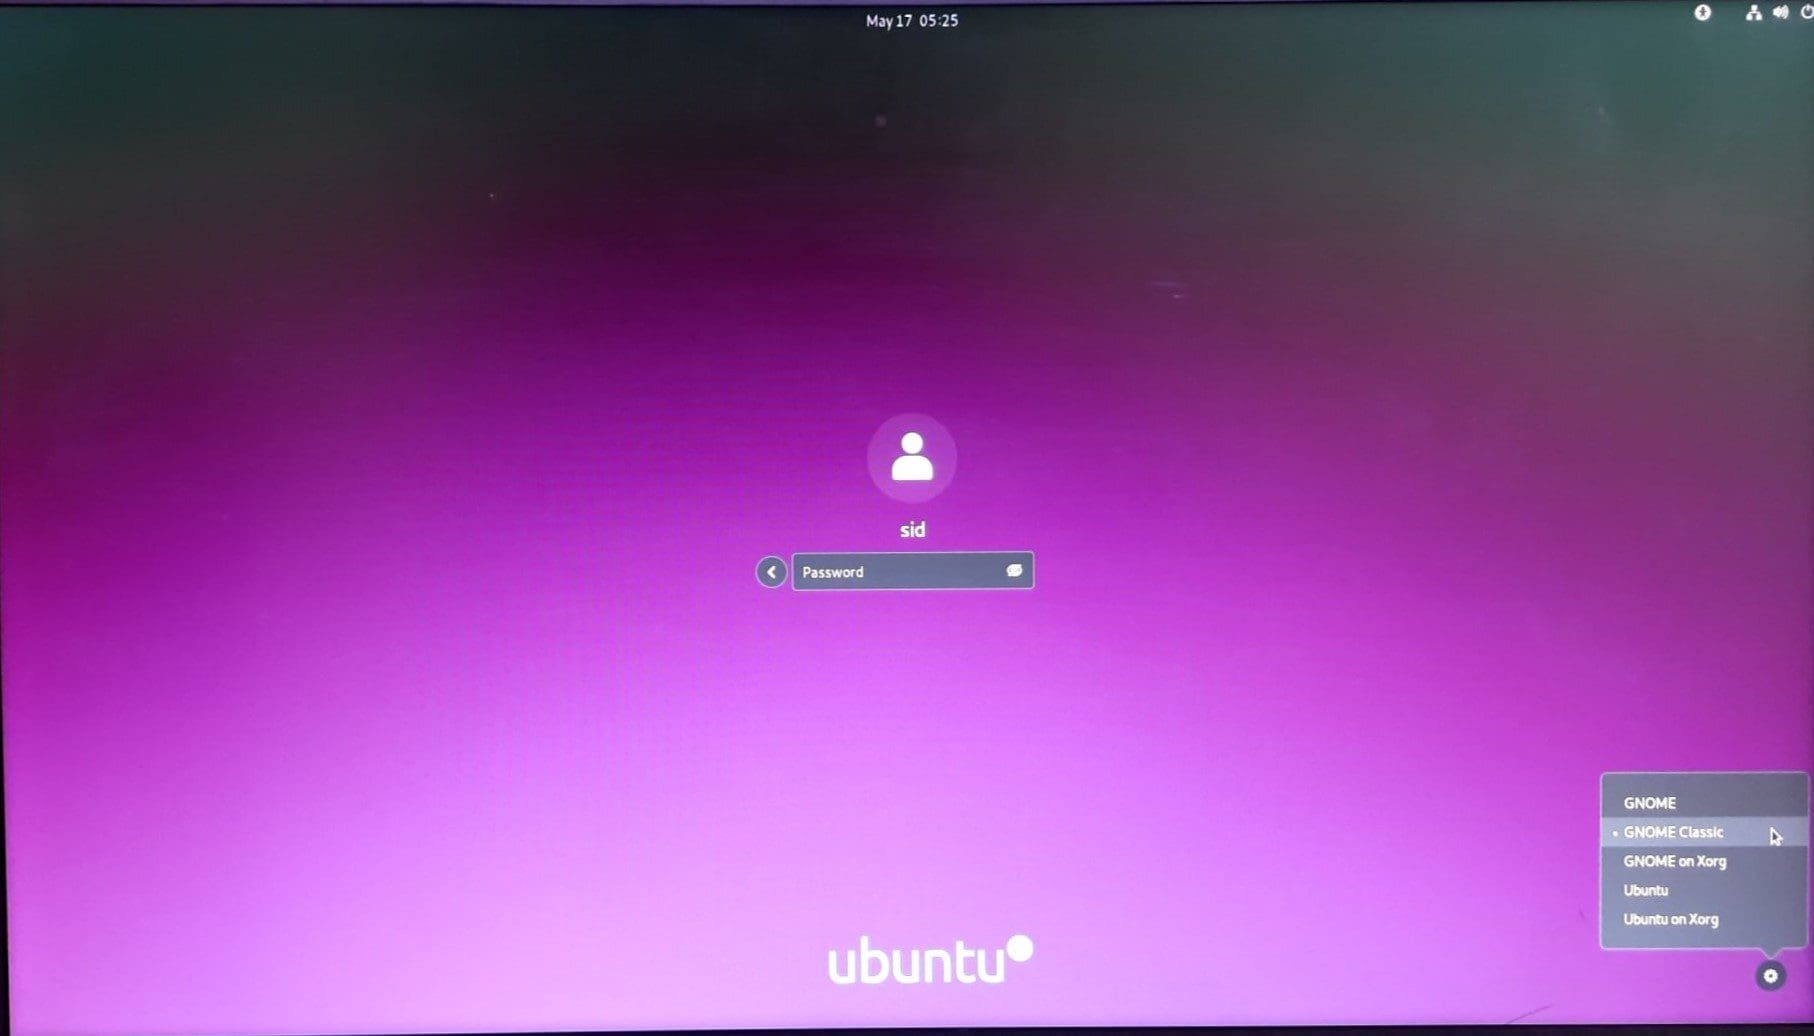 Switching to Vanilla GNOME desktop